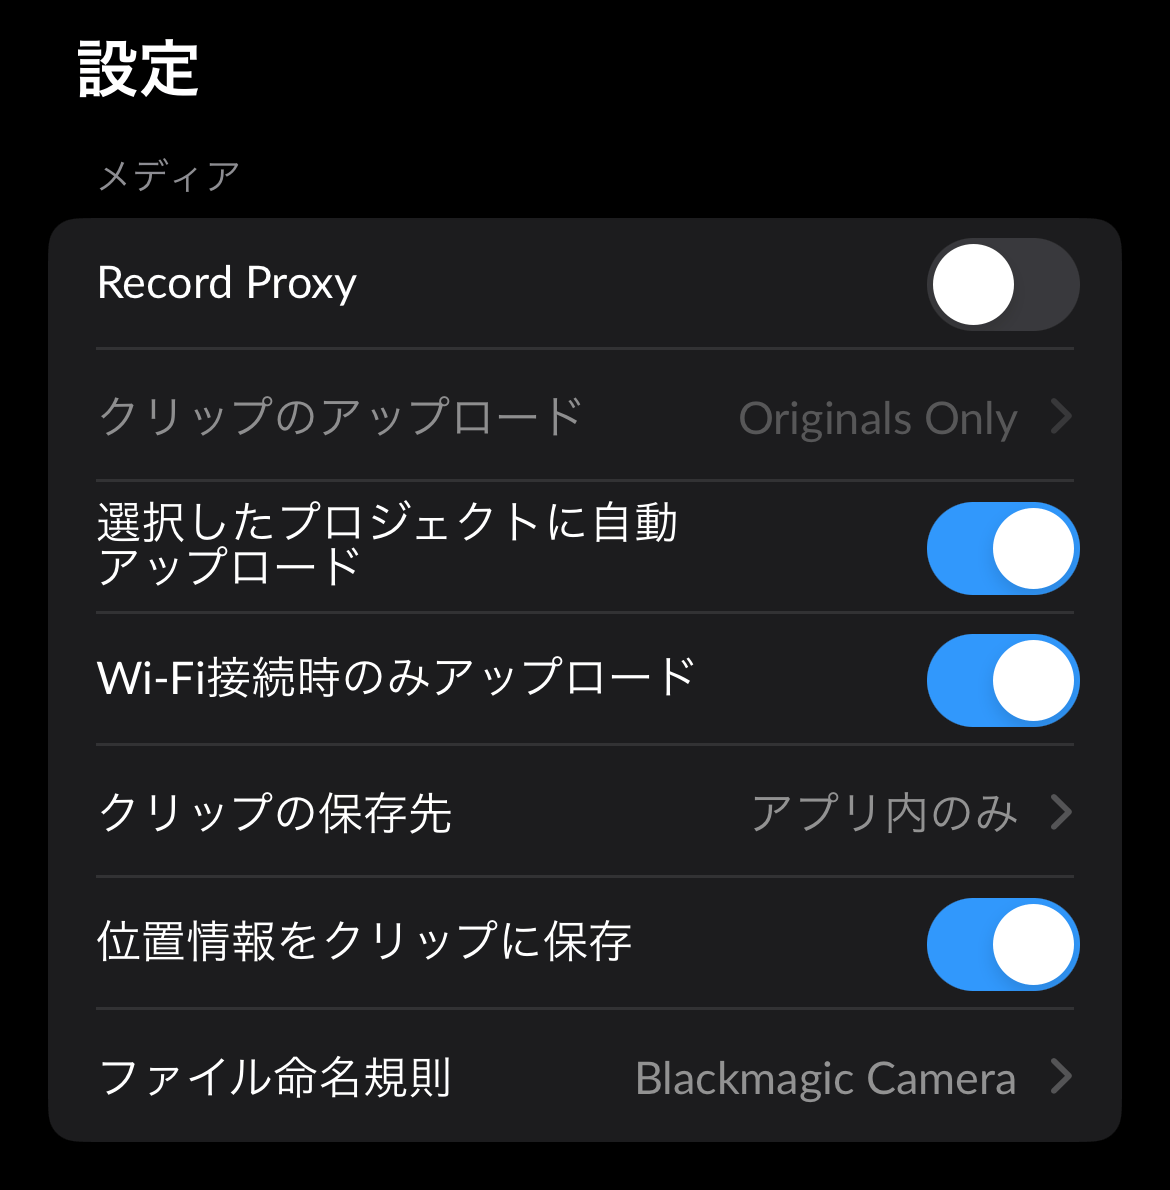 BlackmagicCamera DisableProxy 2